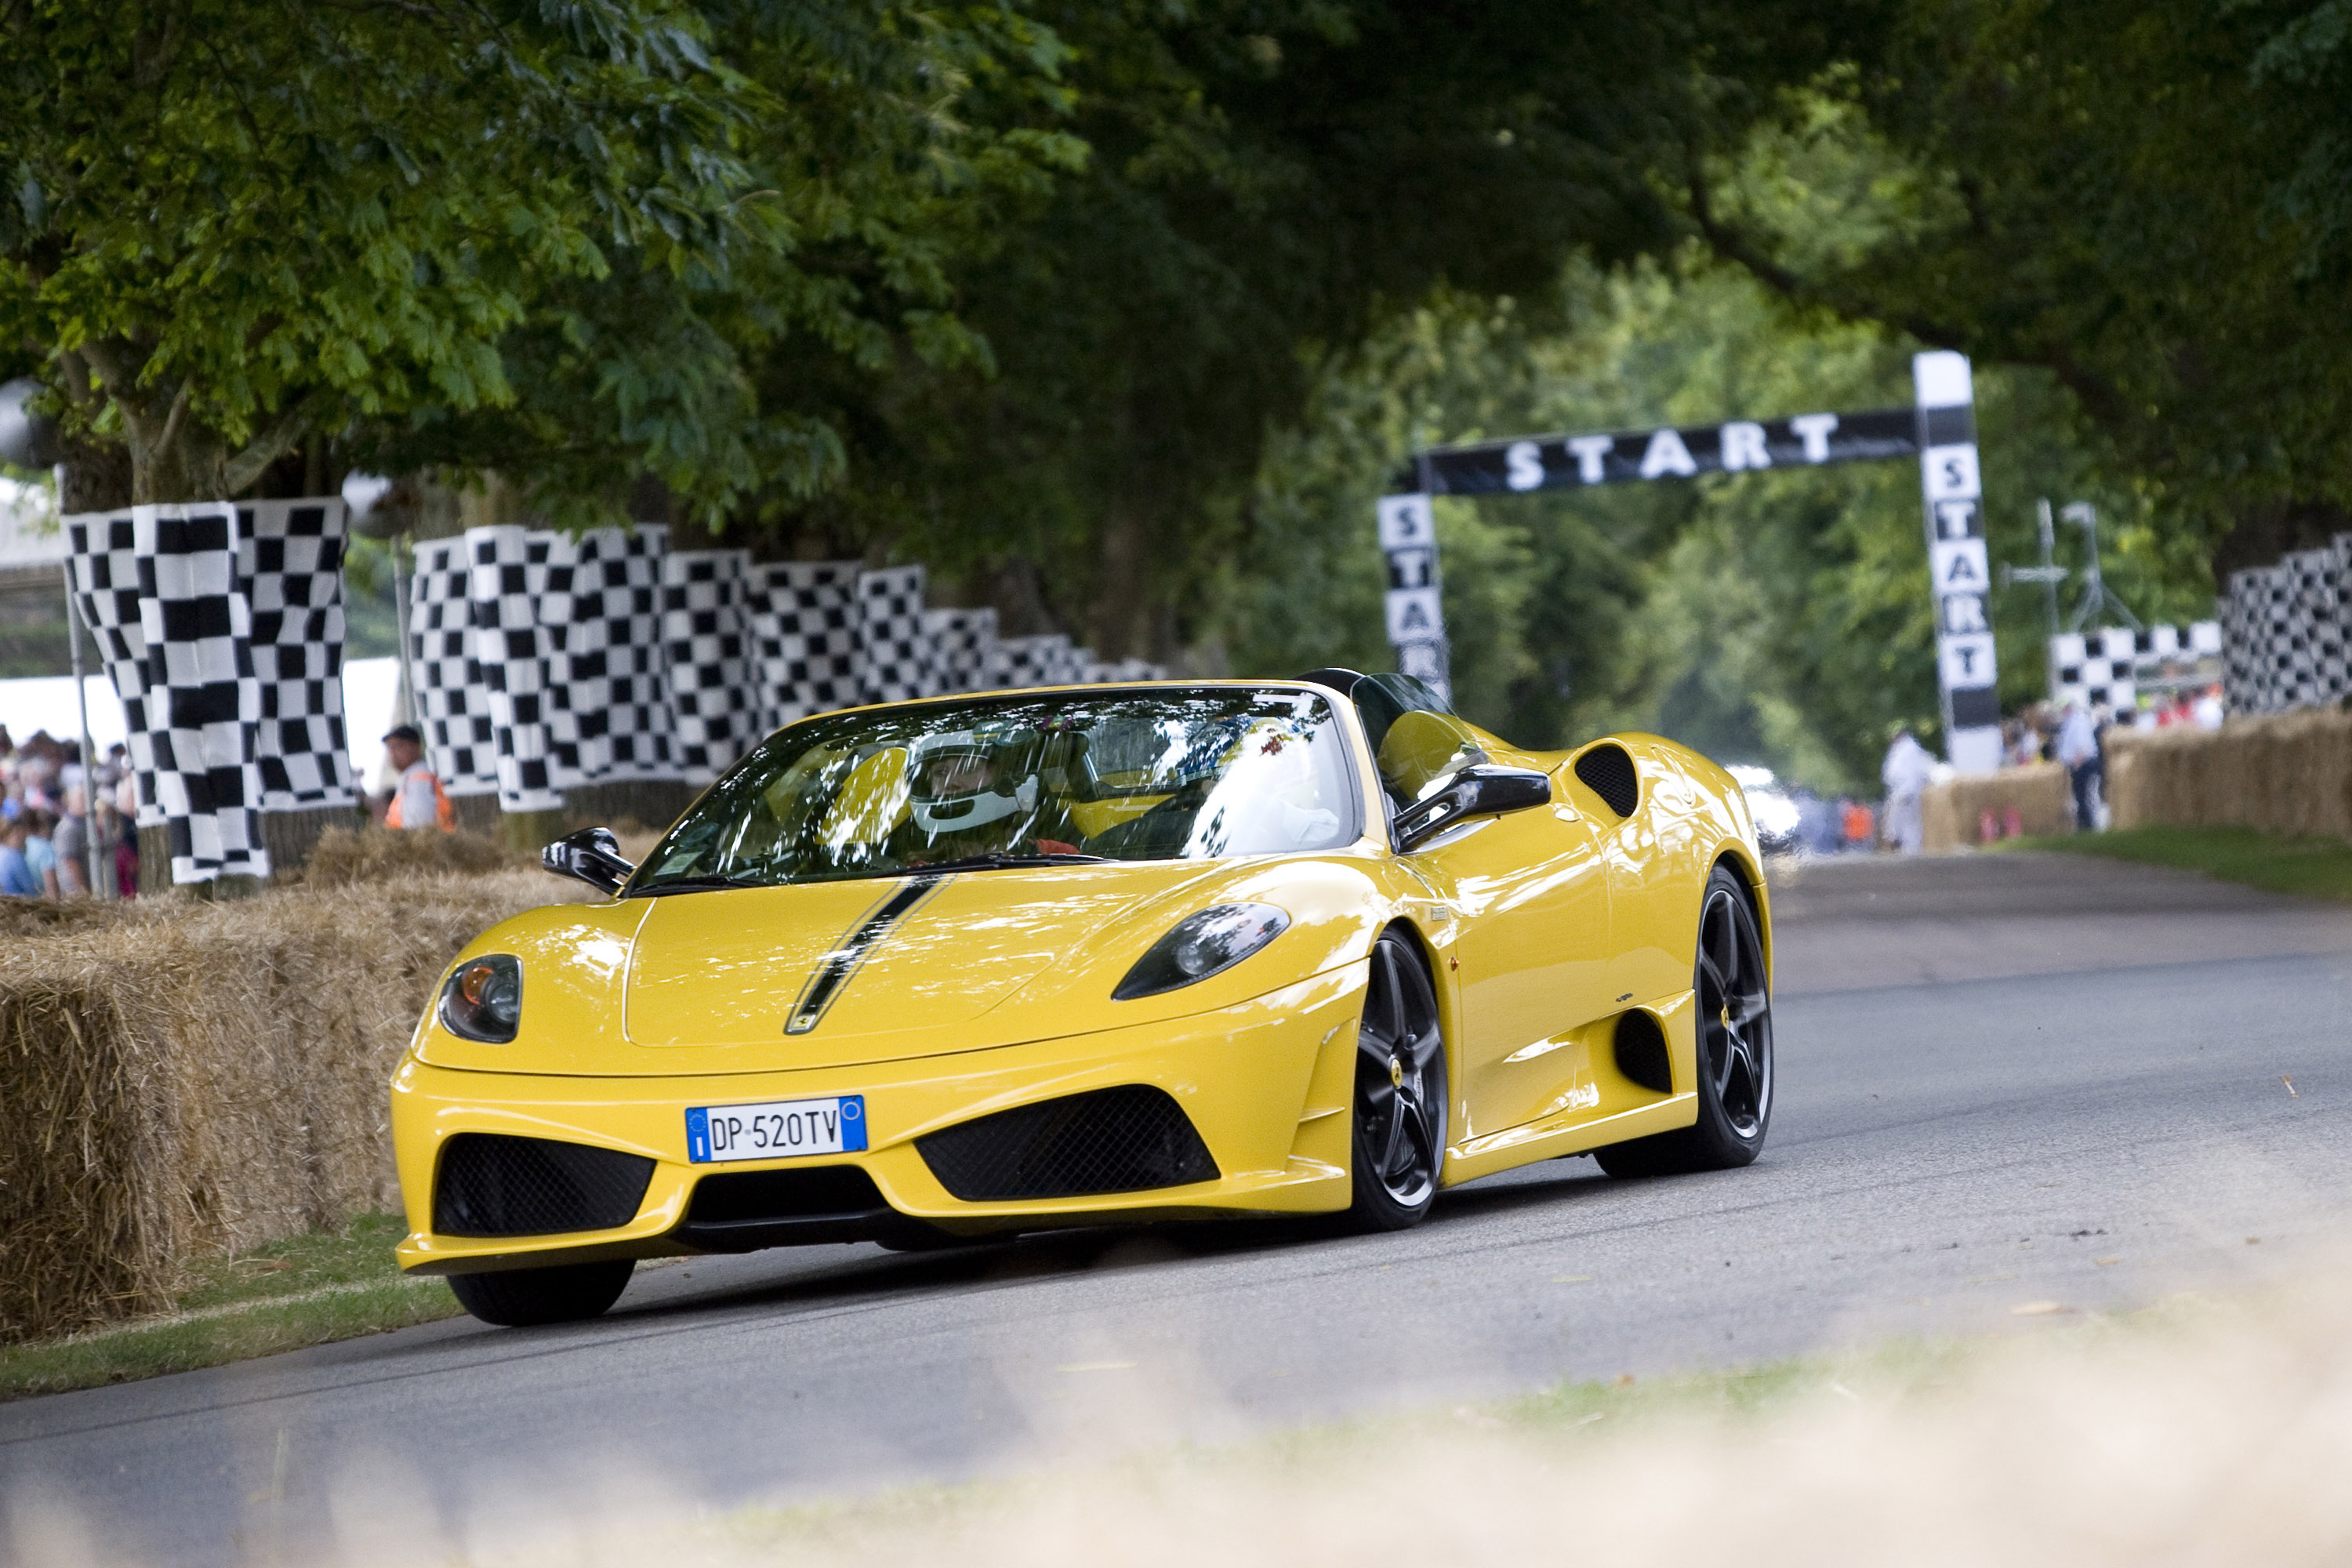 Ferrari at the Goodwood Festival of Speed Supercar Run